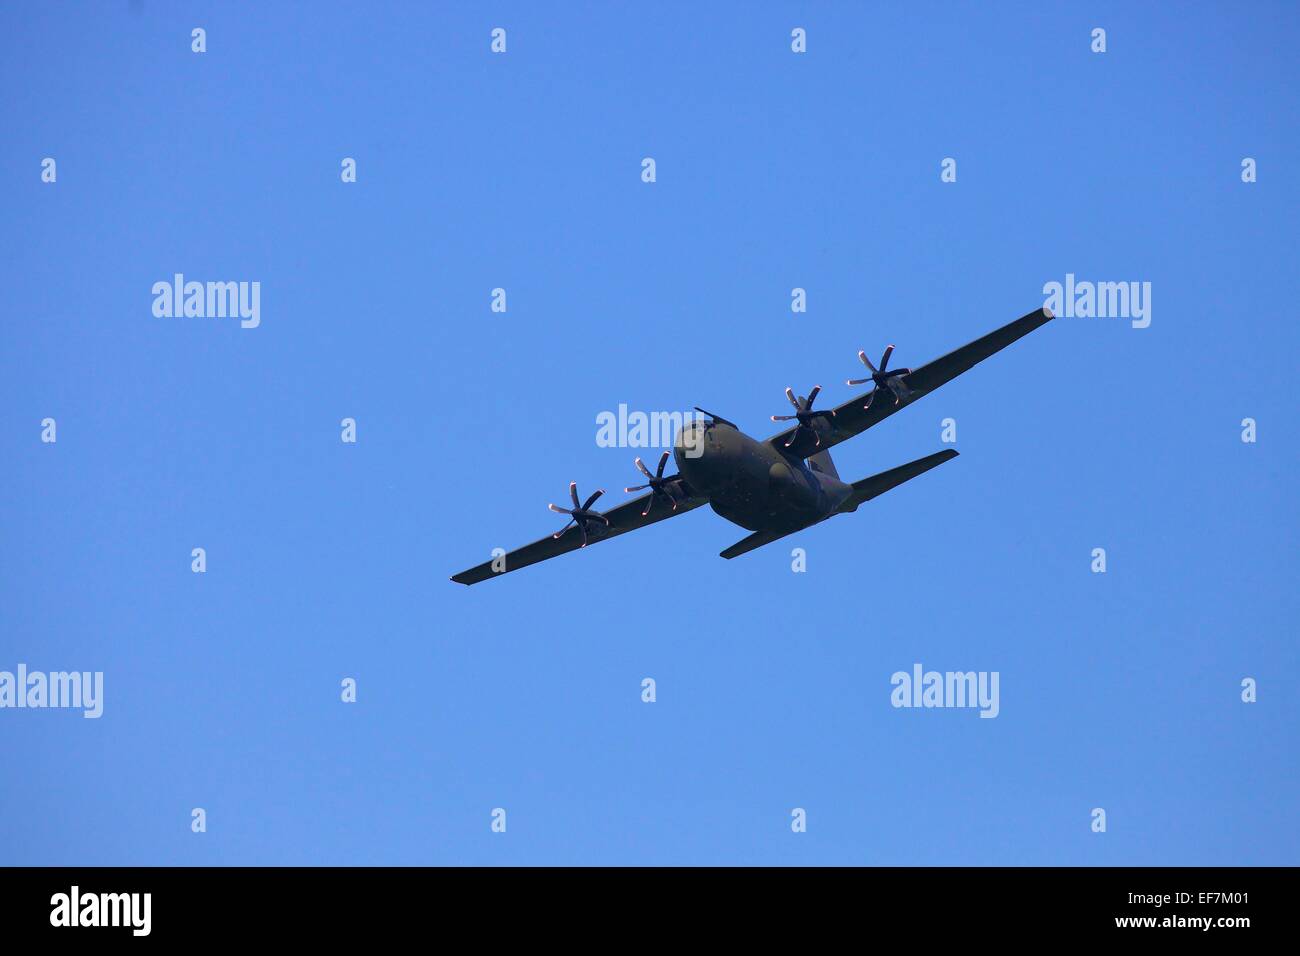 Lockheed C-130 Hercules four-engine turboprop military transport aircraft. Stock Photo